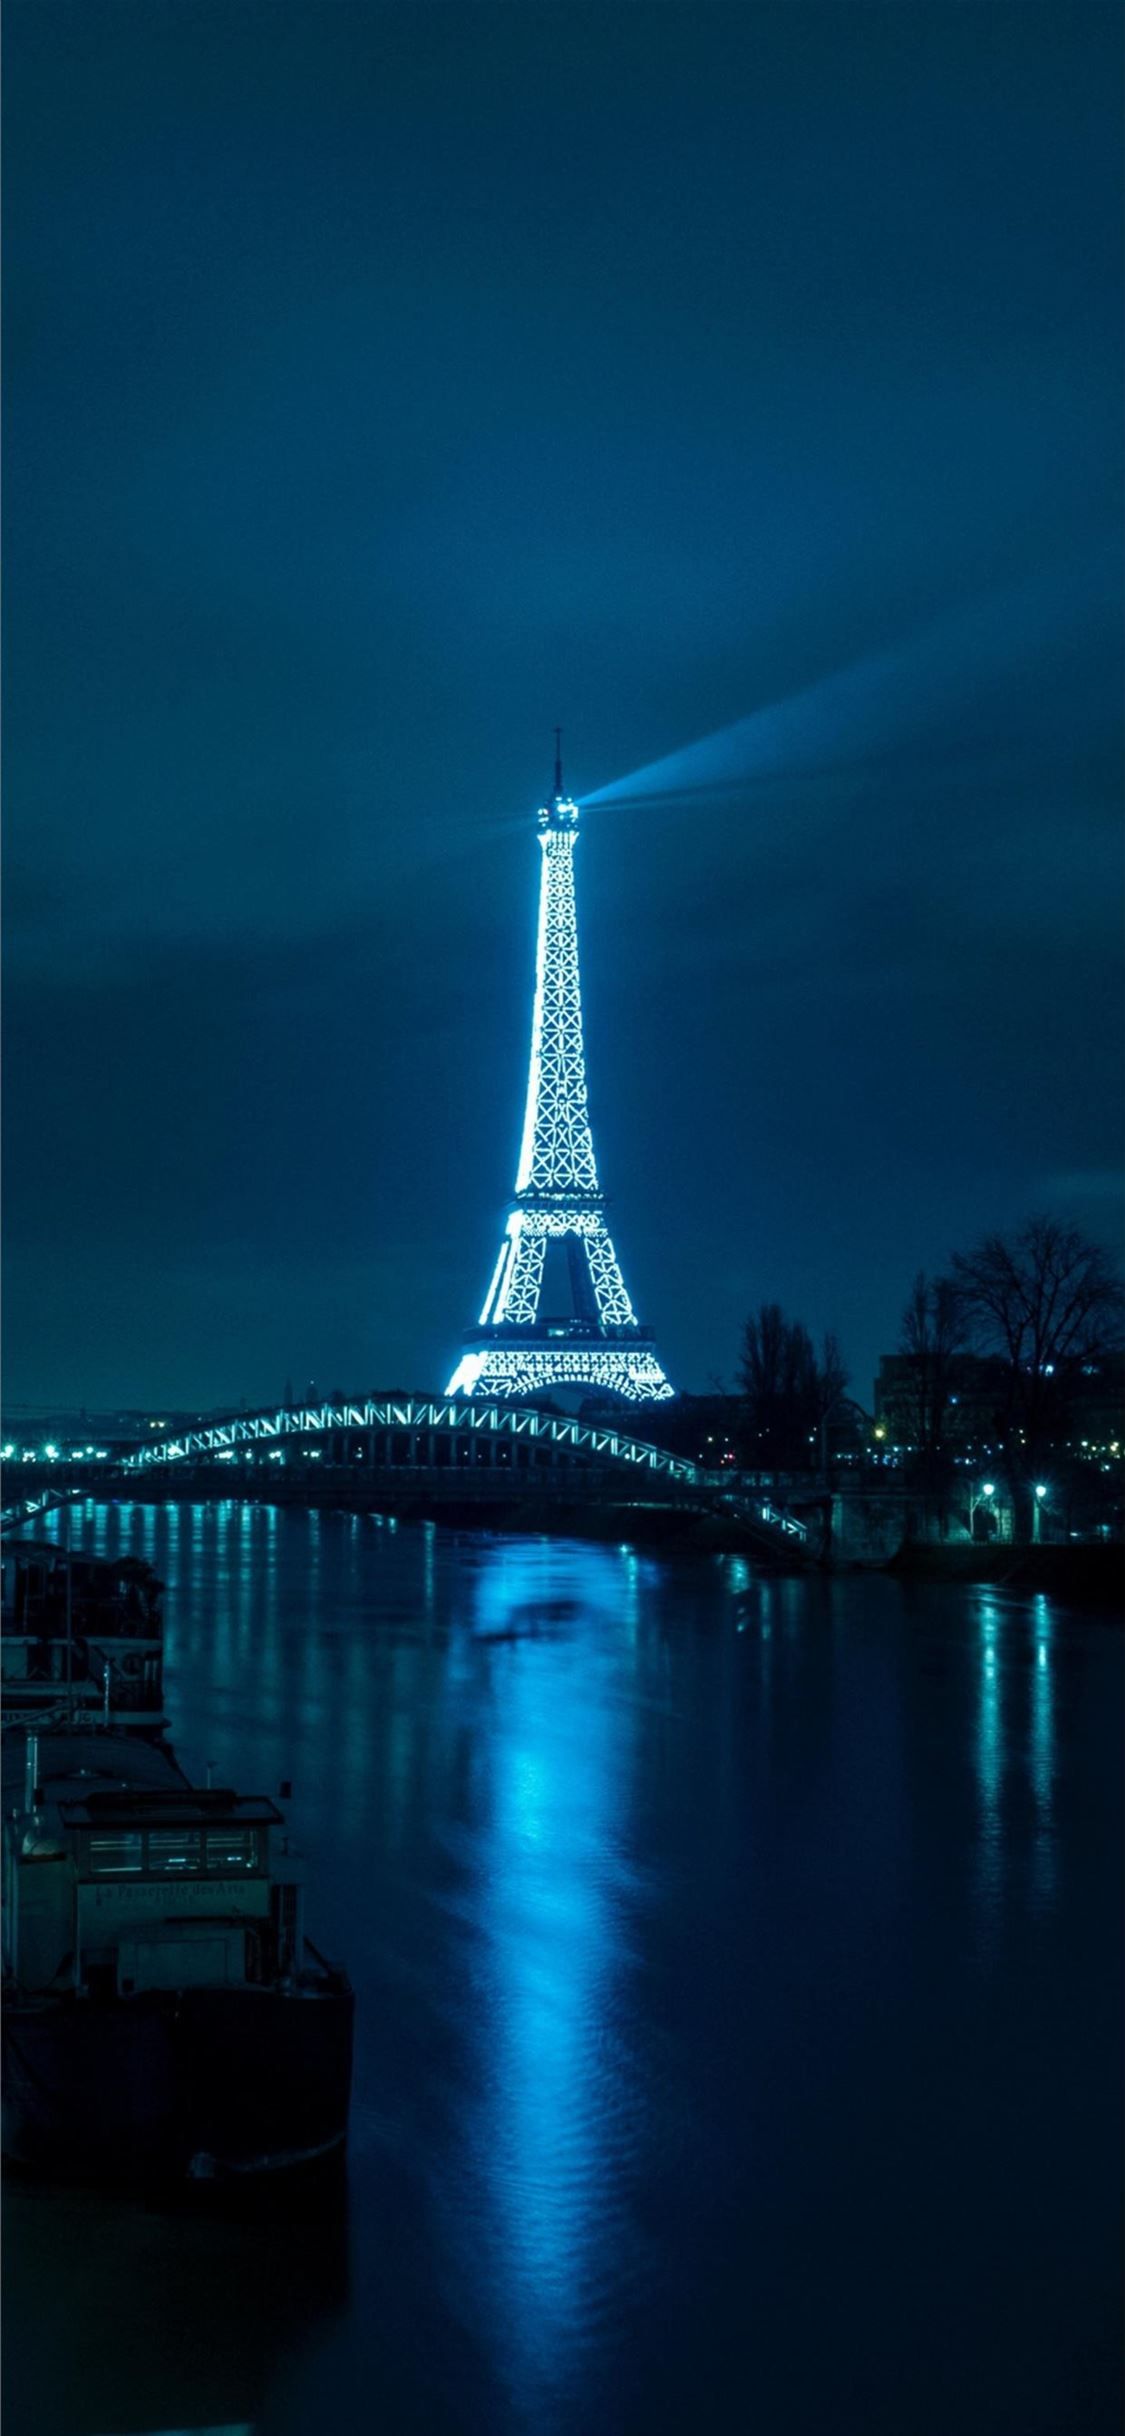 Paris eiffel tower night city river bridge Android. #paris mostbeautifulplacestovisit #france #iPhone. City wallpaper, Eiffel tower at night, Paris